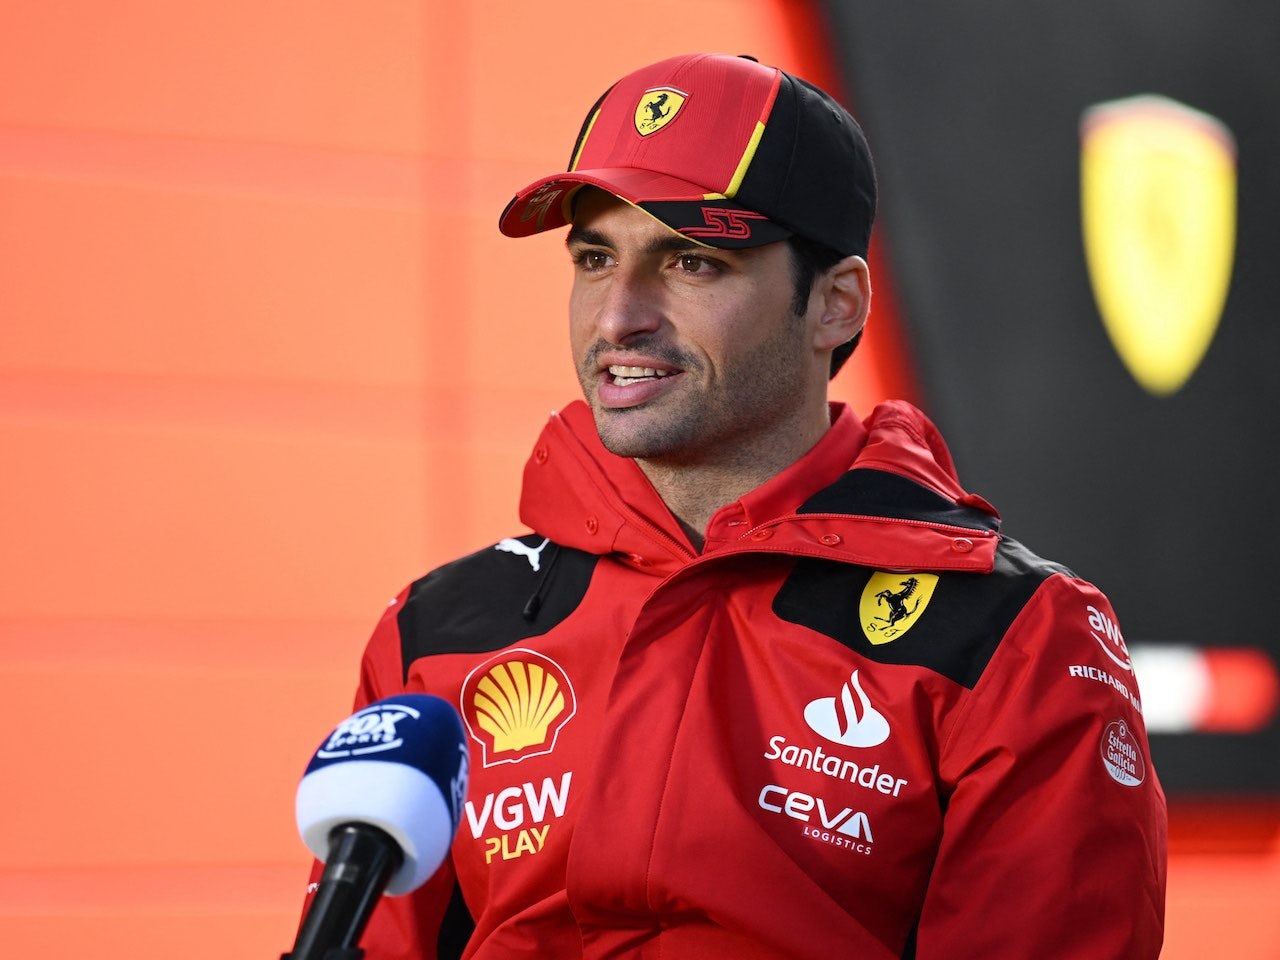 Alonso 'closer to victory' than Ferrari - Sainz